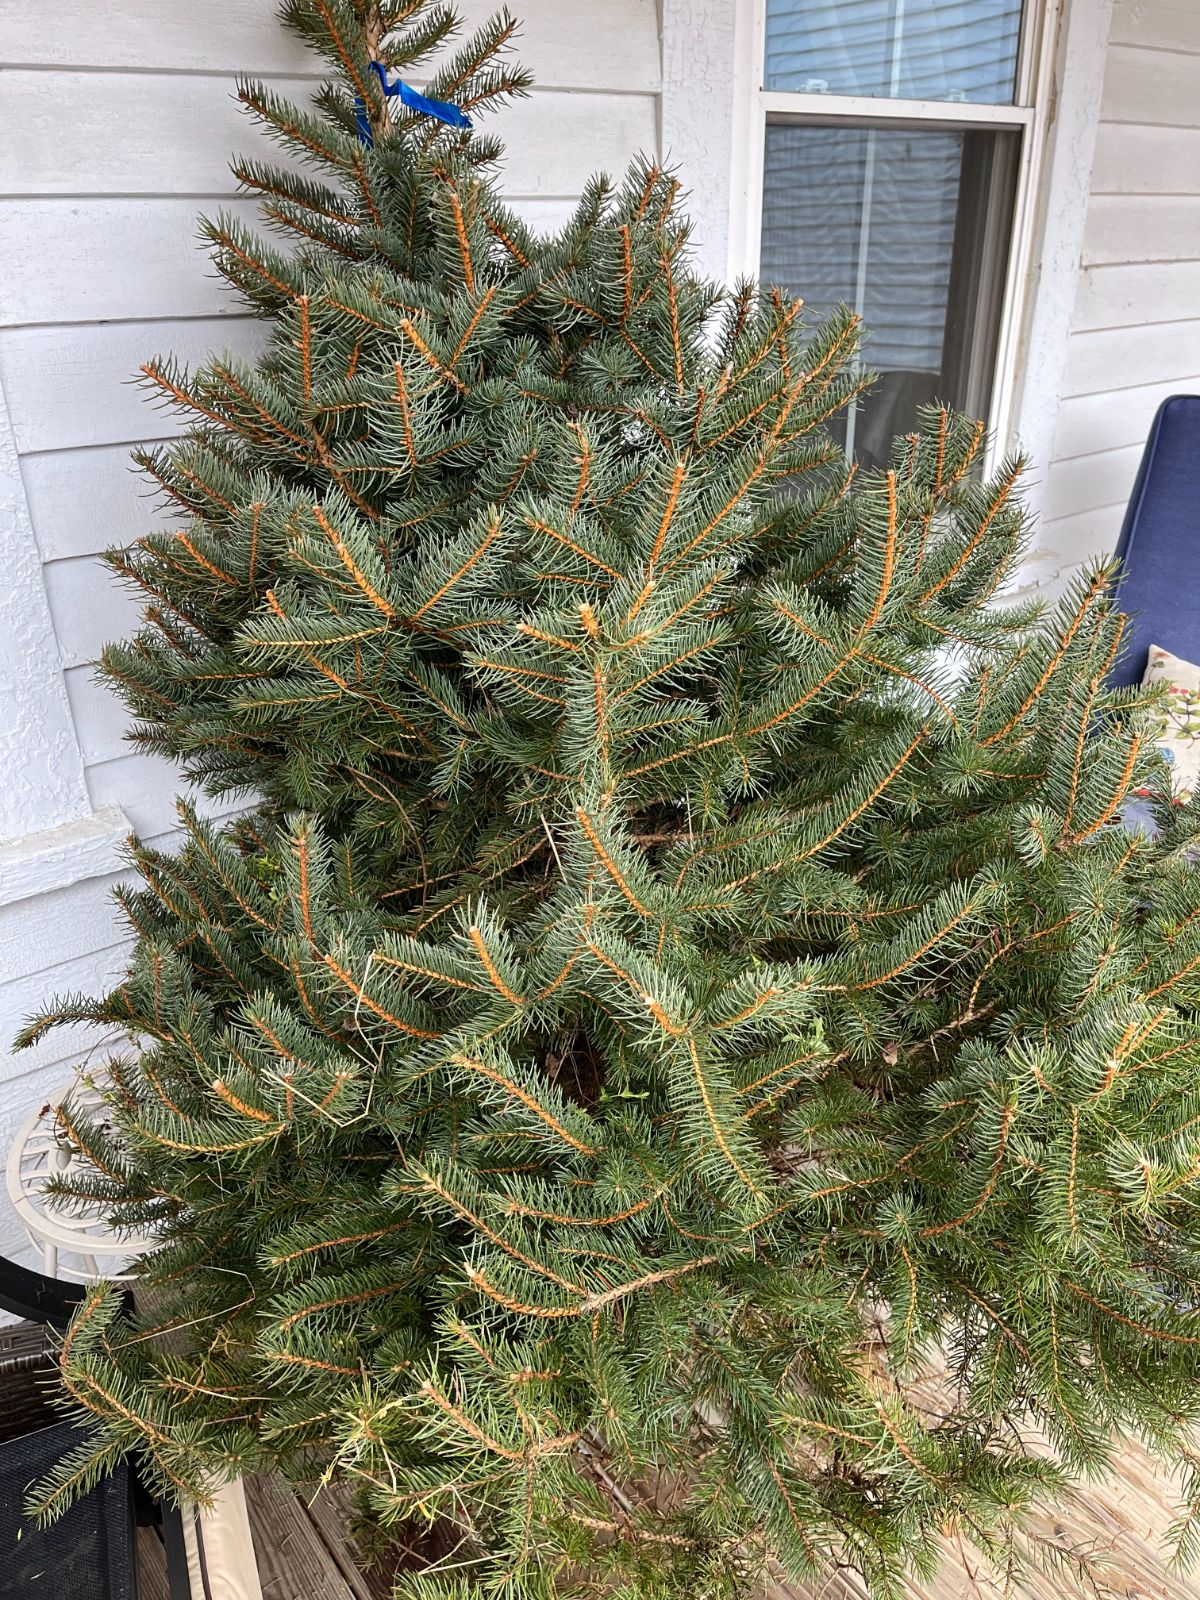 A fresh cut Christmas tree waiting to come inside